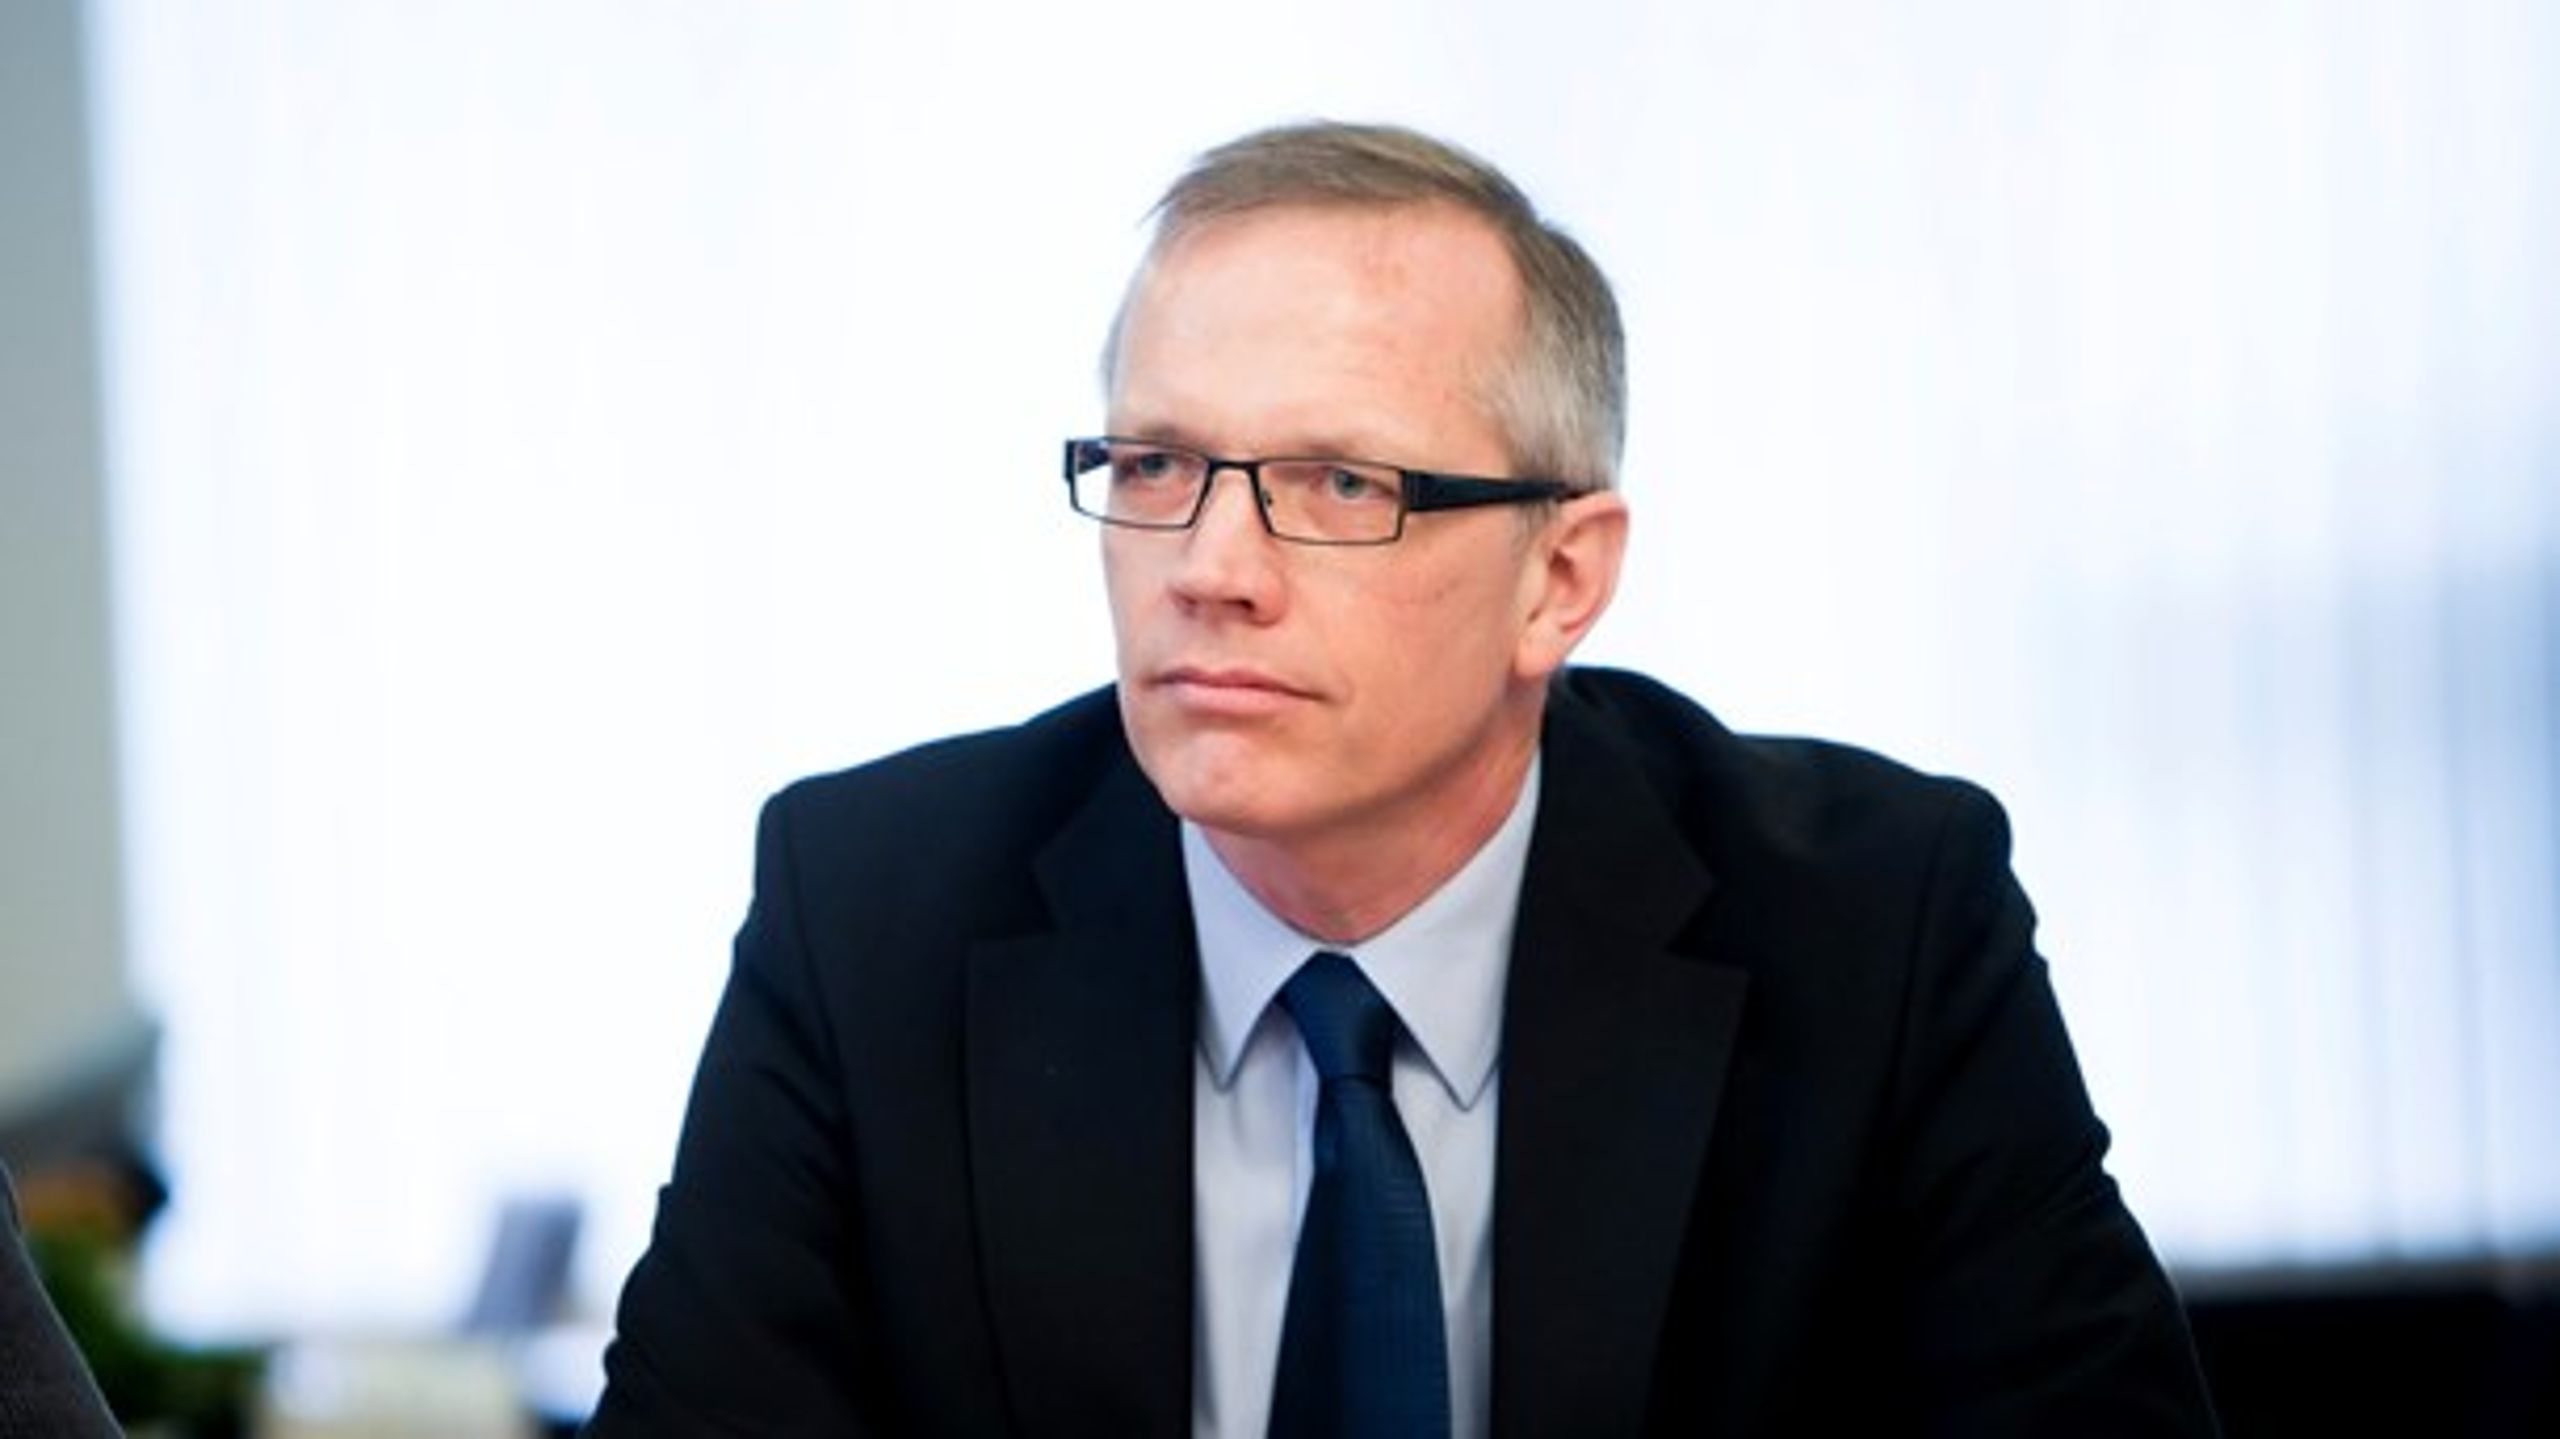 Lars Dahl Pedersen har været hospitalsdirektør siden 2011, men er i dag fratrådt sin stilling.